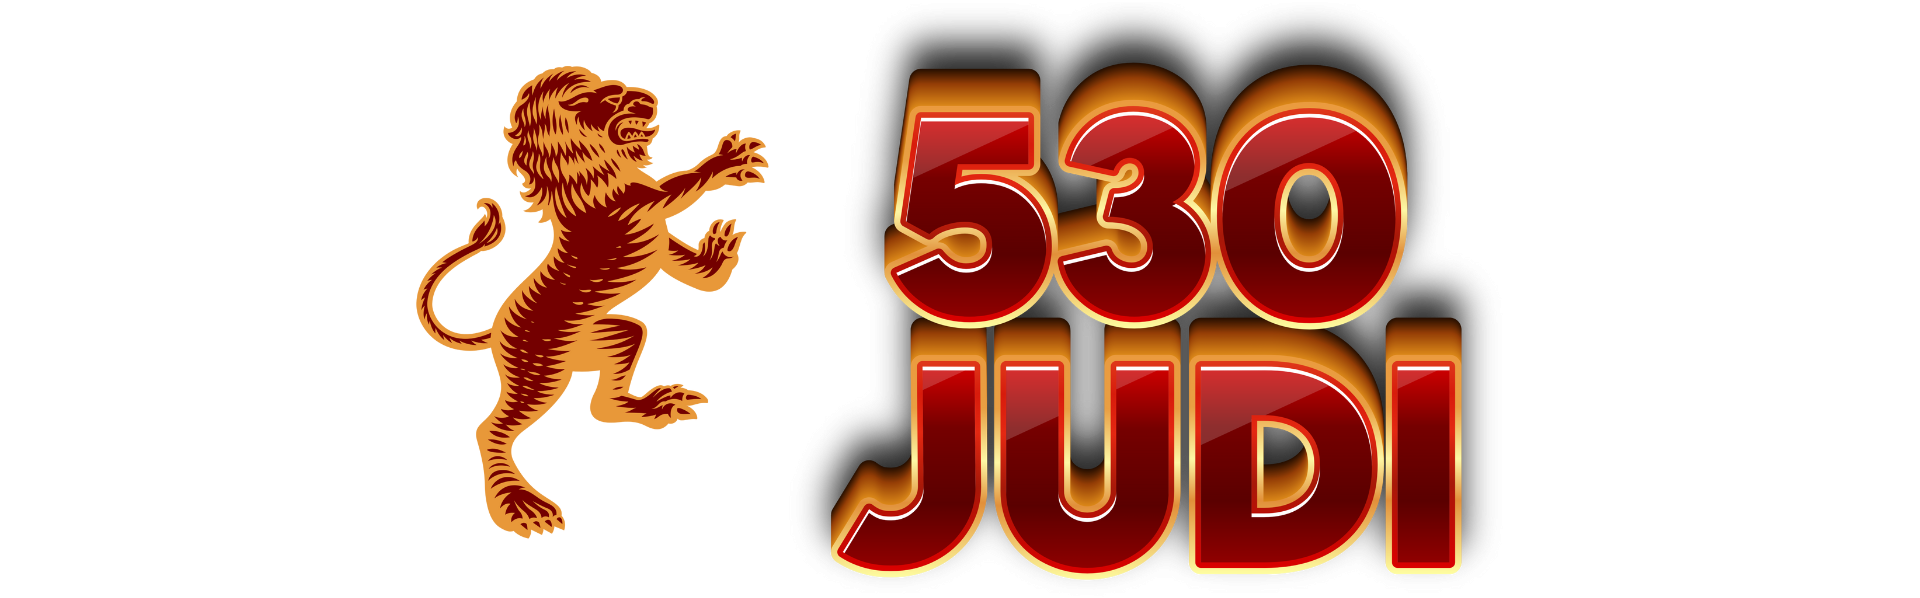 530 Judi